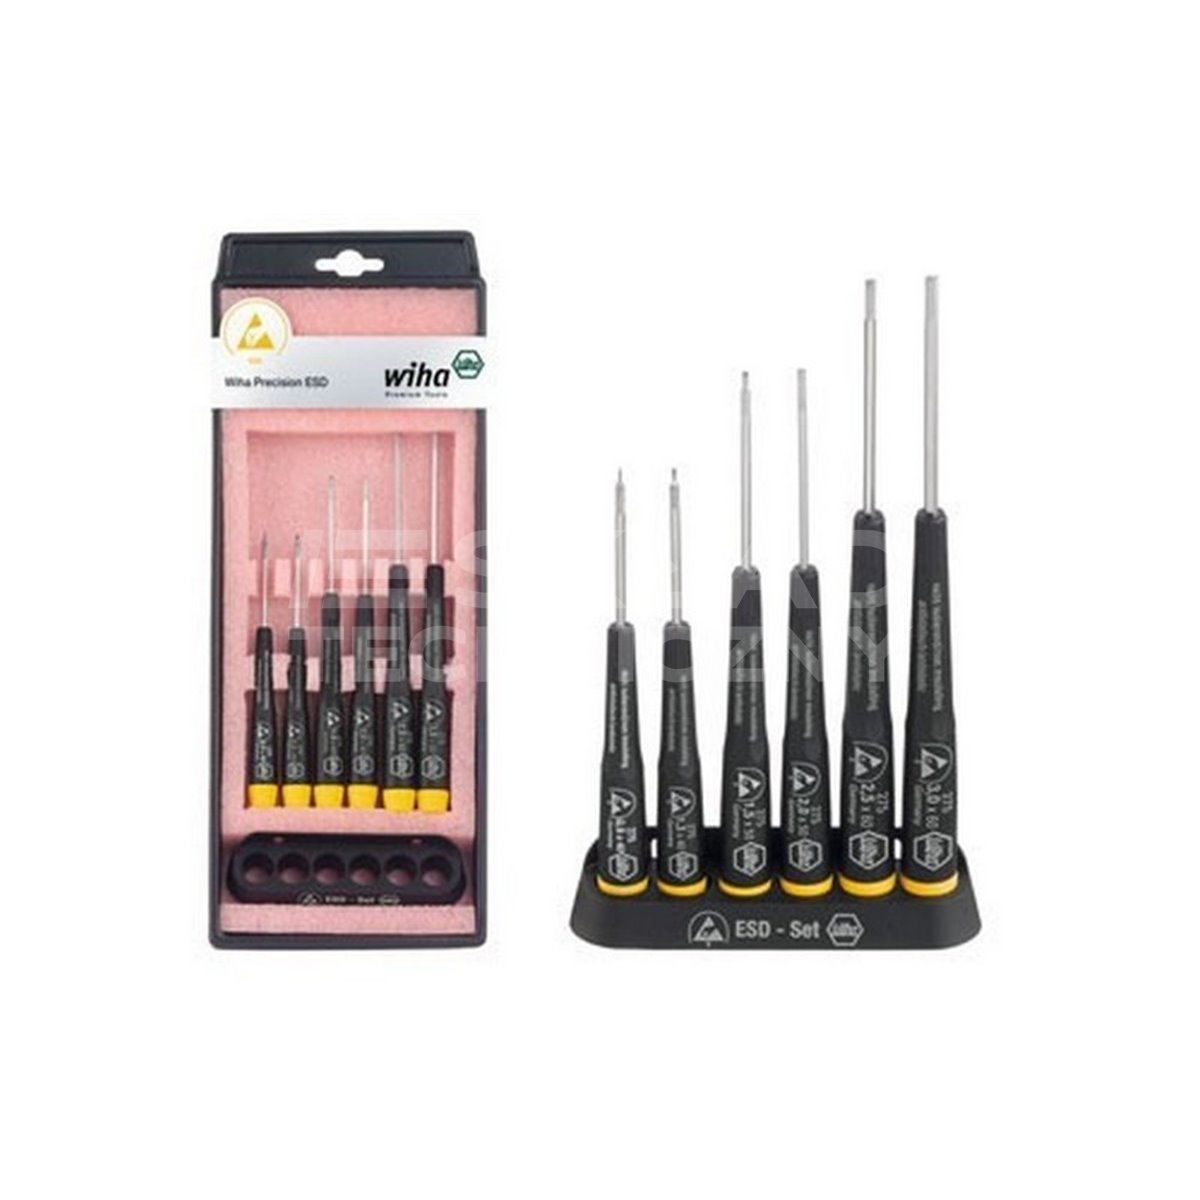 A set of precise ESD hex screwdrivers 6pc. 275K6 Wiha 32278*.